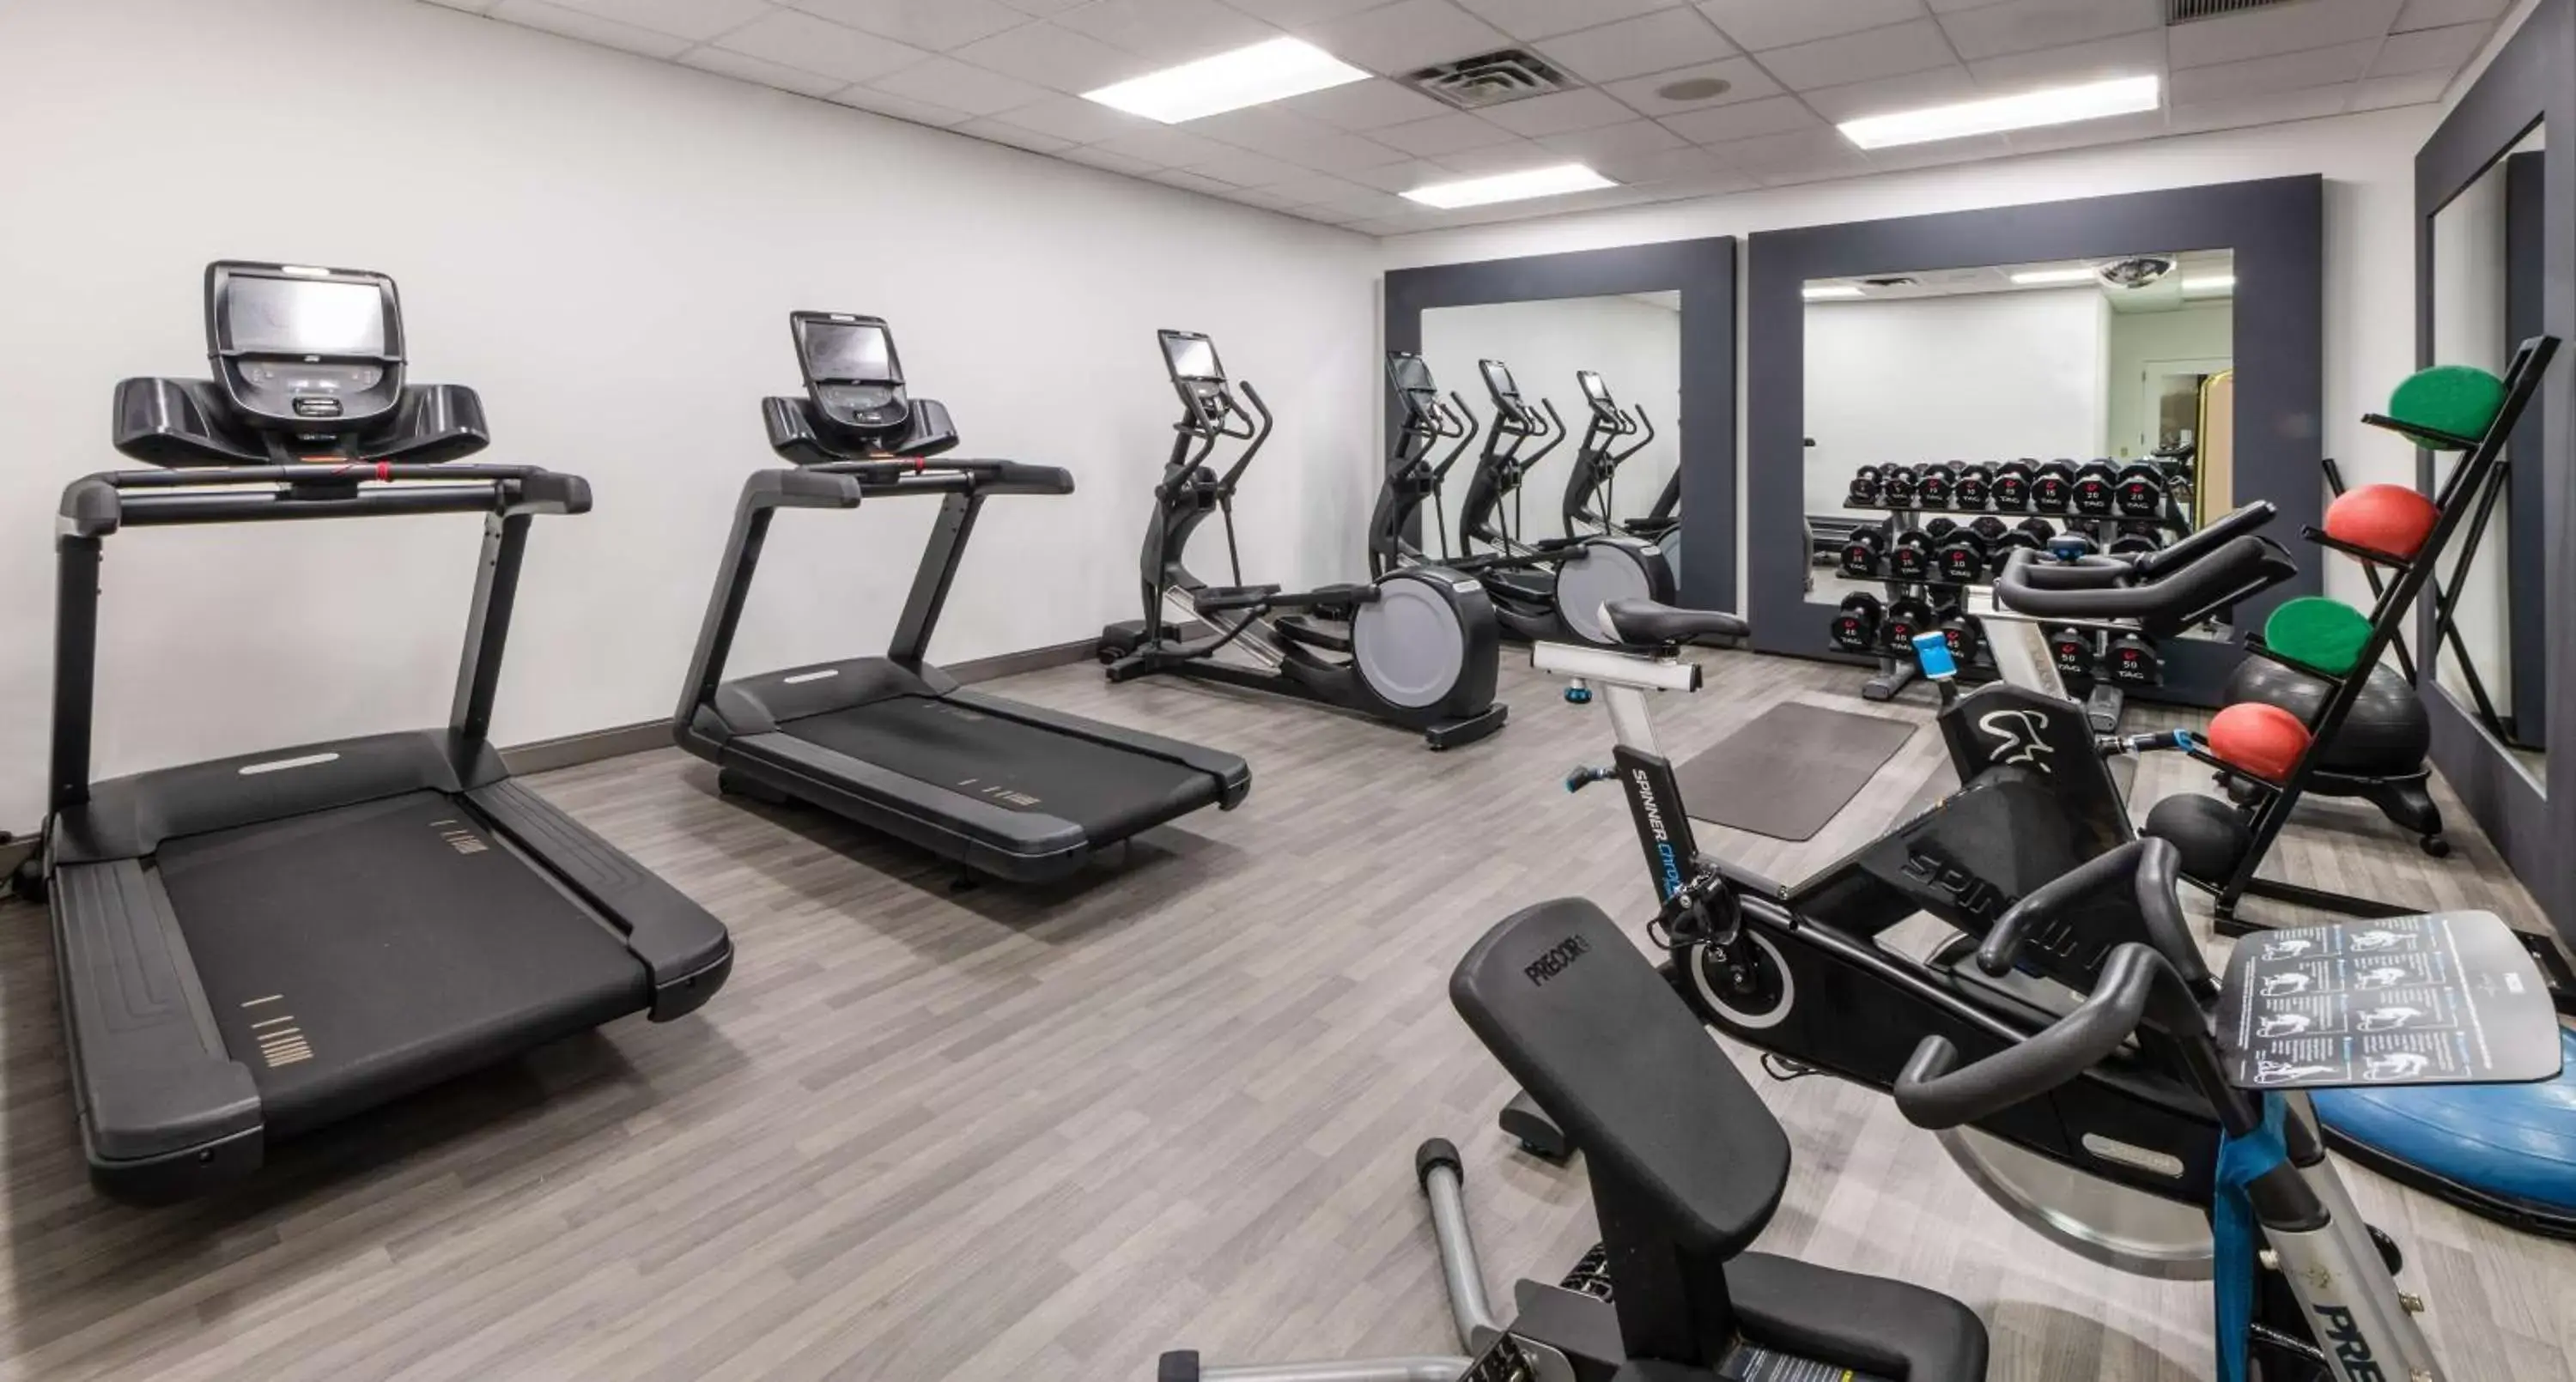 Fitness centre/facilities, Fitness Center/Facilities in DoubleTree by Hilton Newark Penn Station, NJ